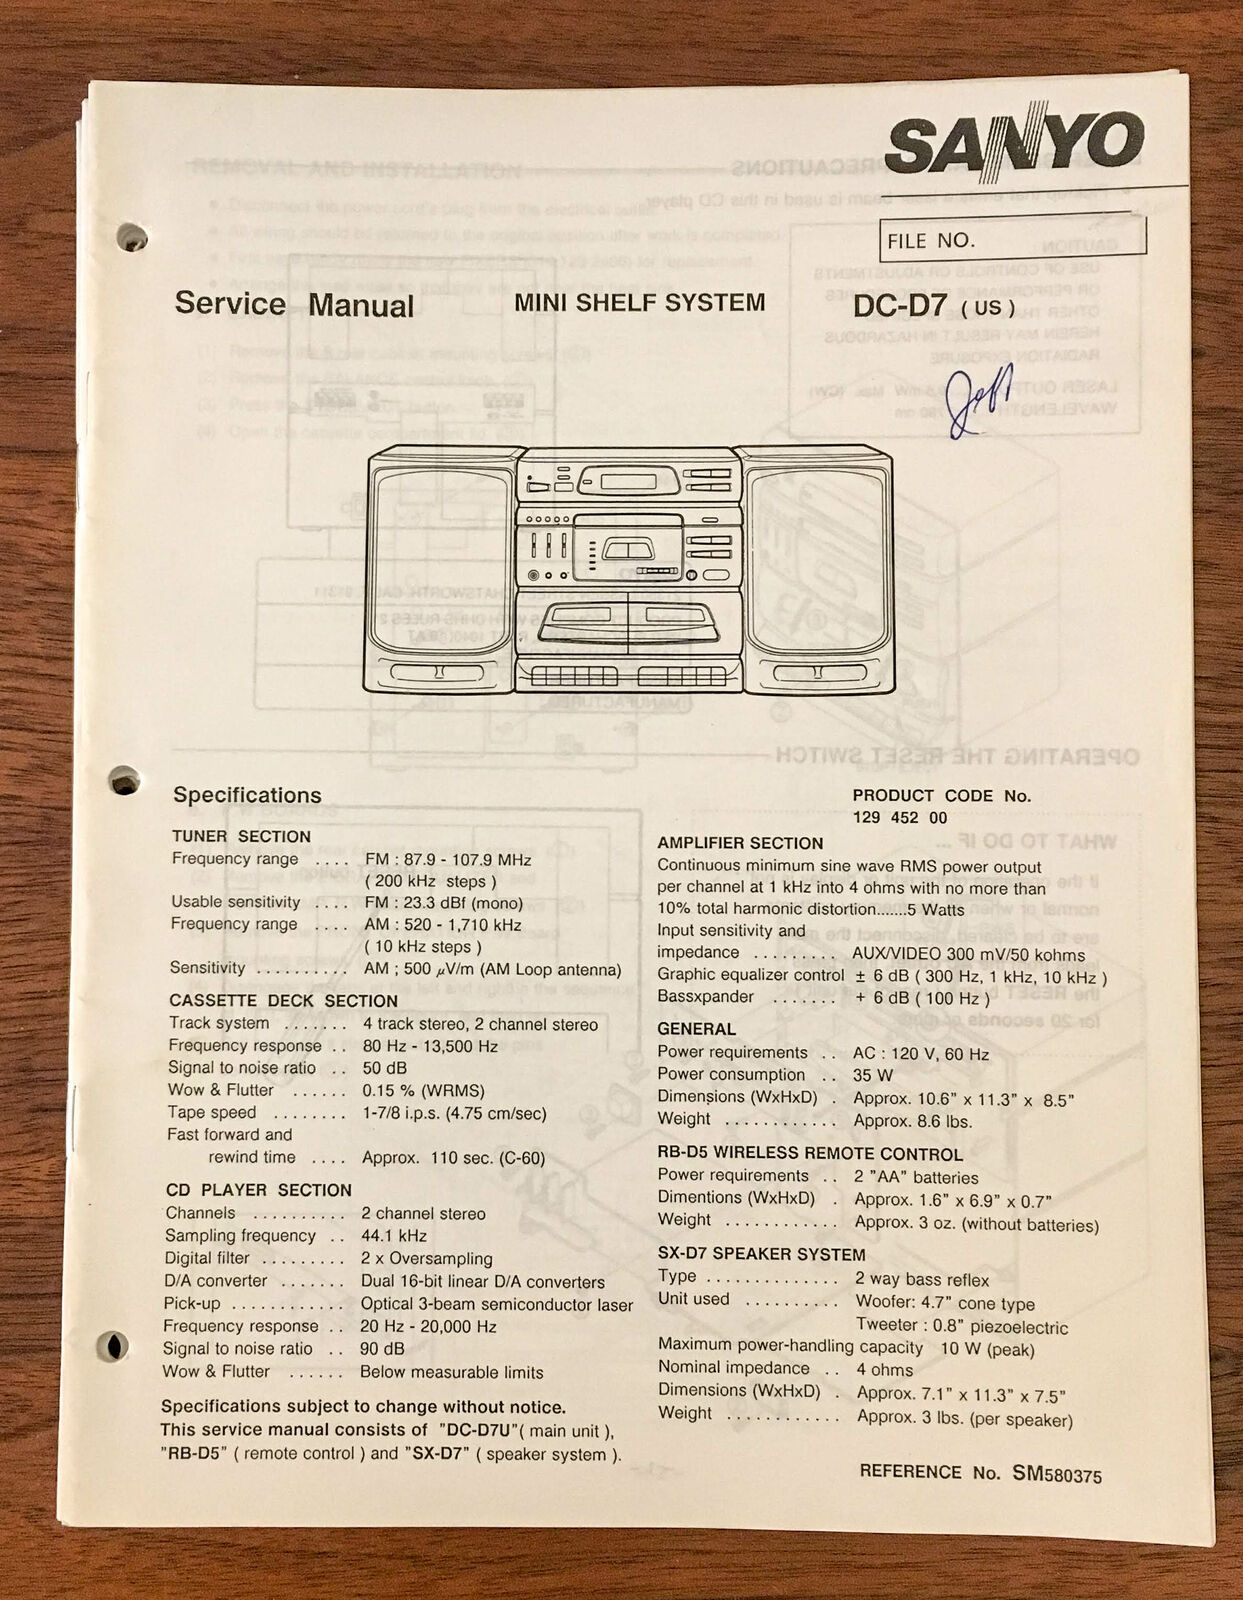 Sanyo Dc-d7 Stereo Service Manual *original*